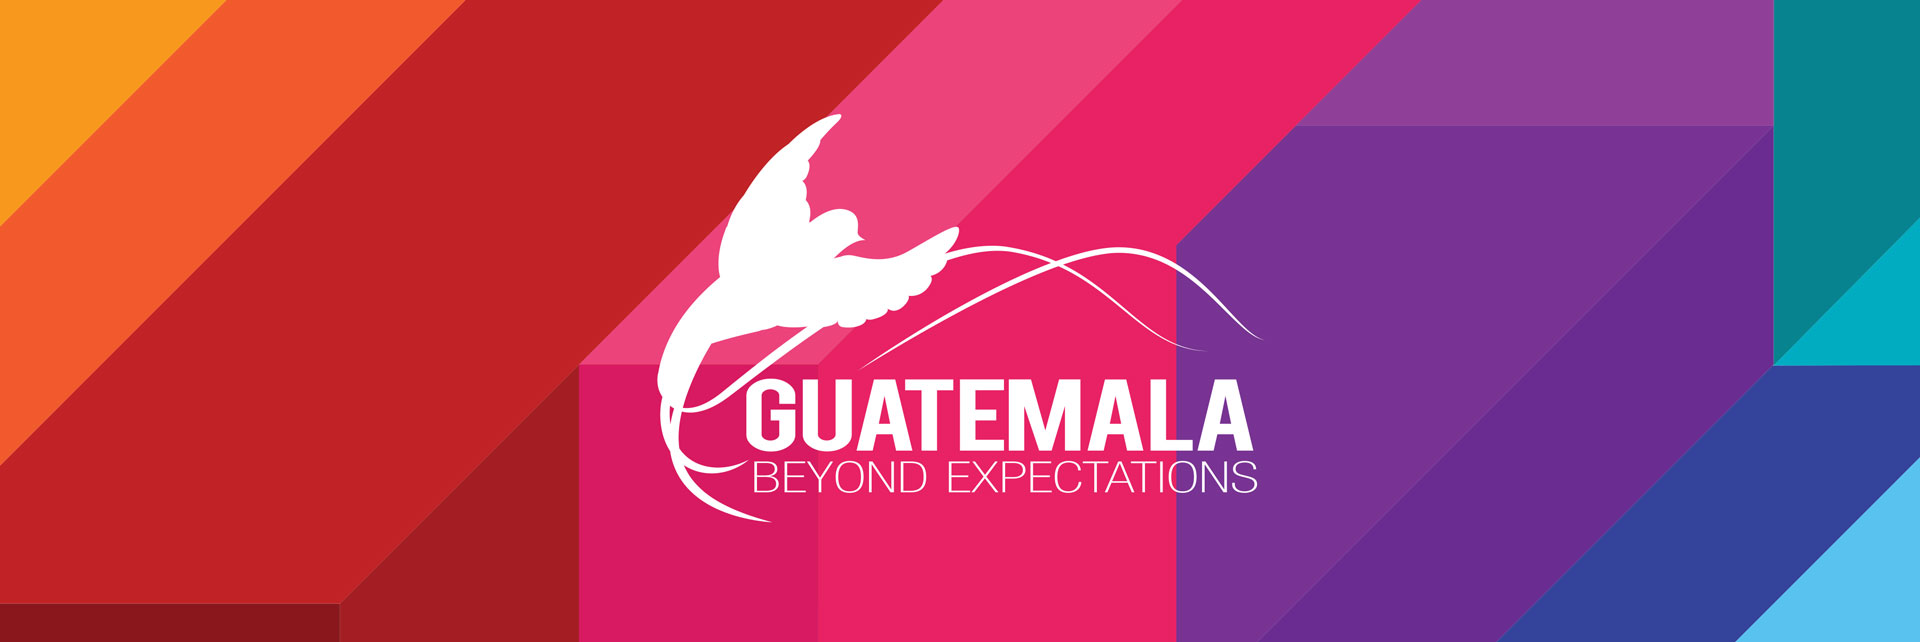 Manual de Marca Guatemala Beyond Expectations